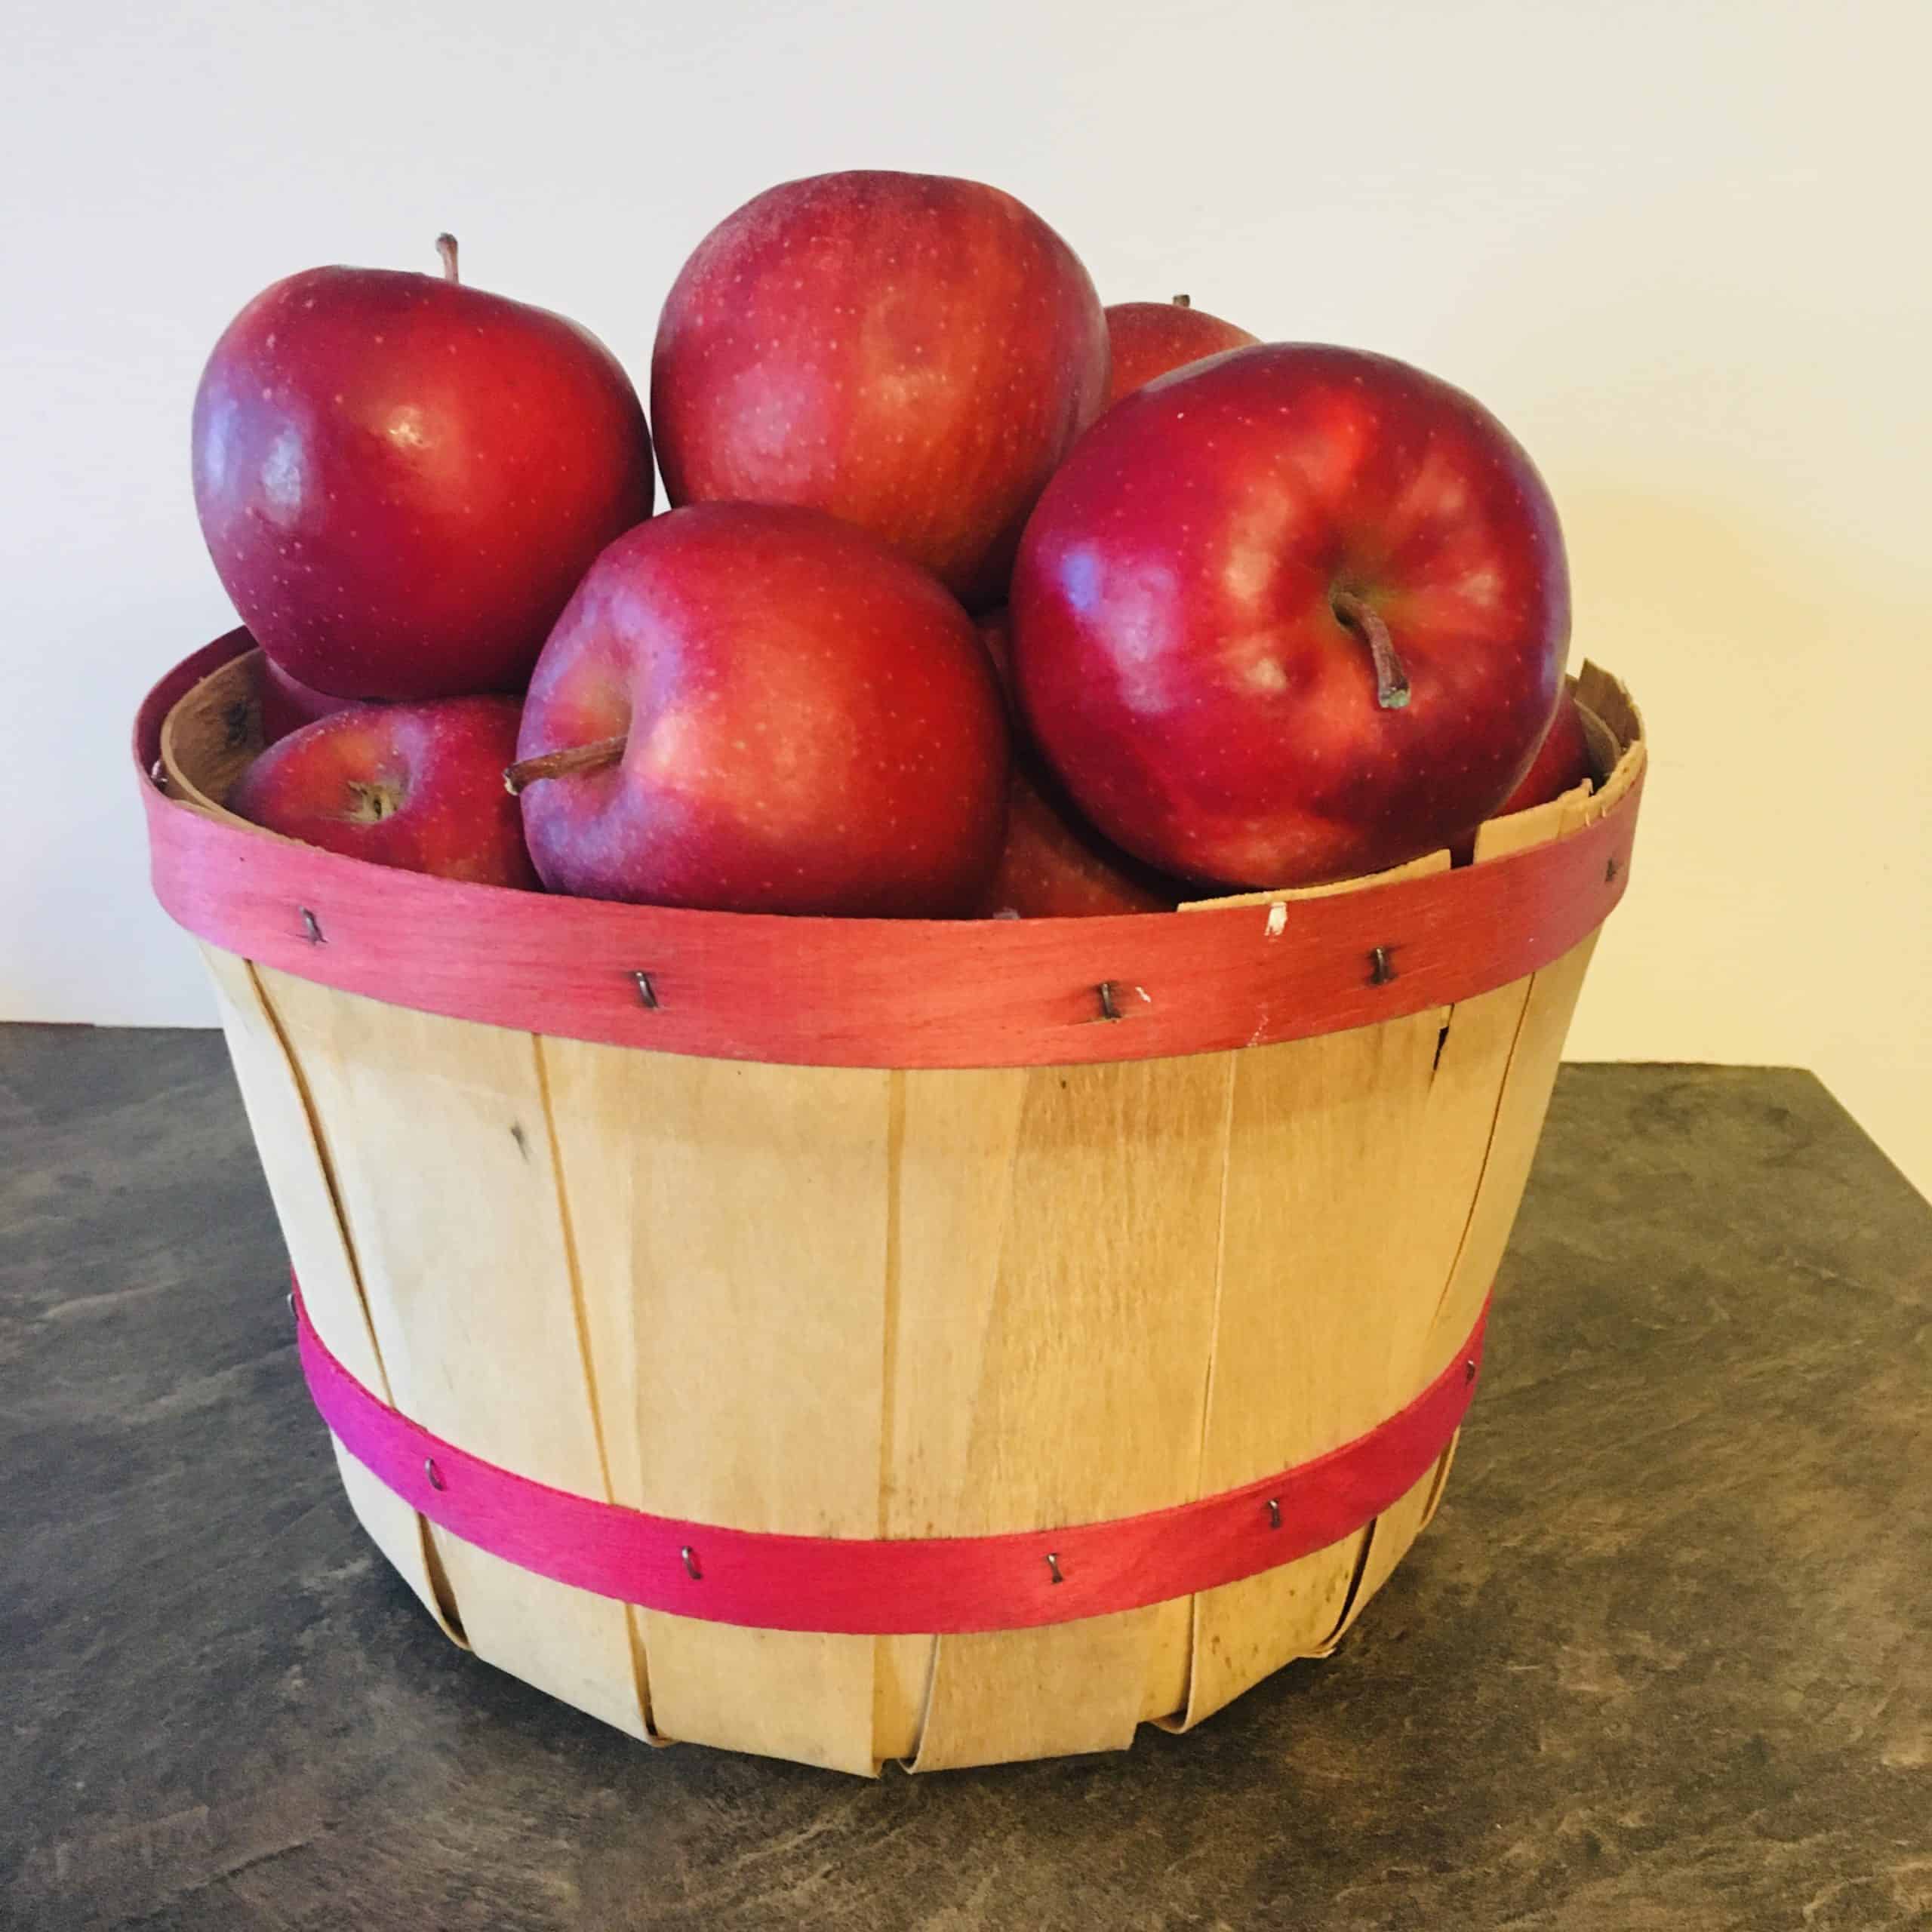 Jona red apples - 13lbs